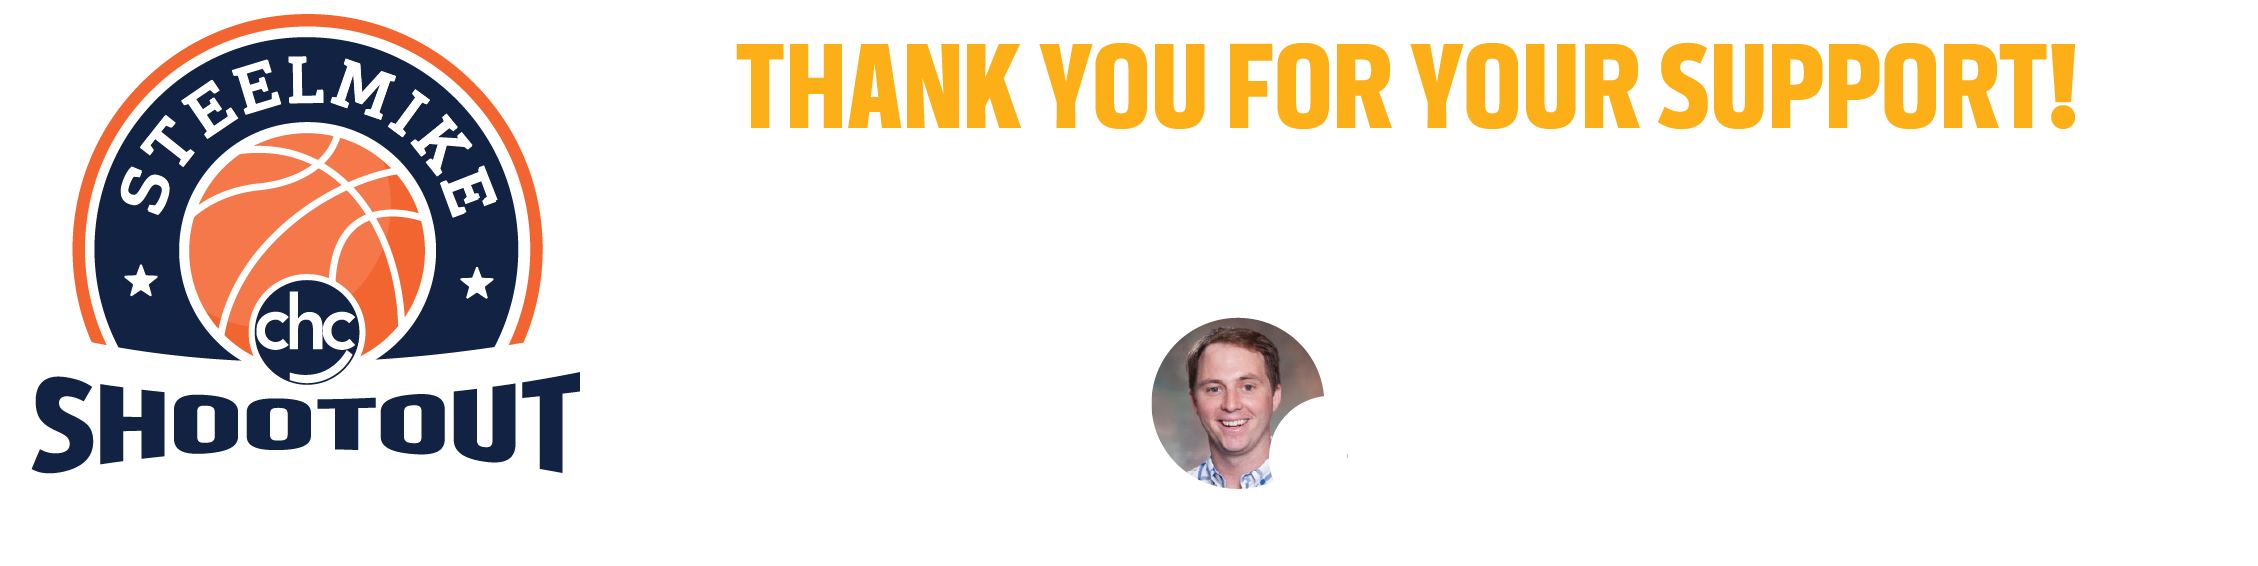 CHC Celebrates SteelMike Shootout